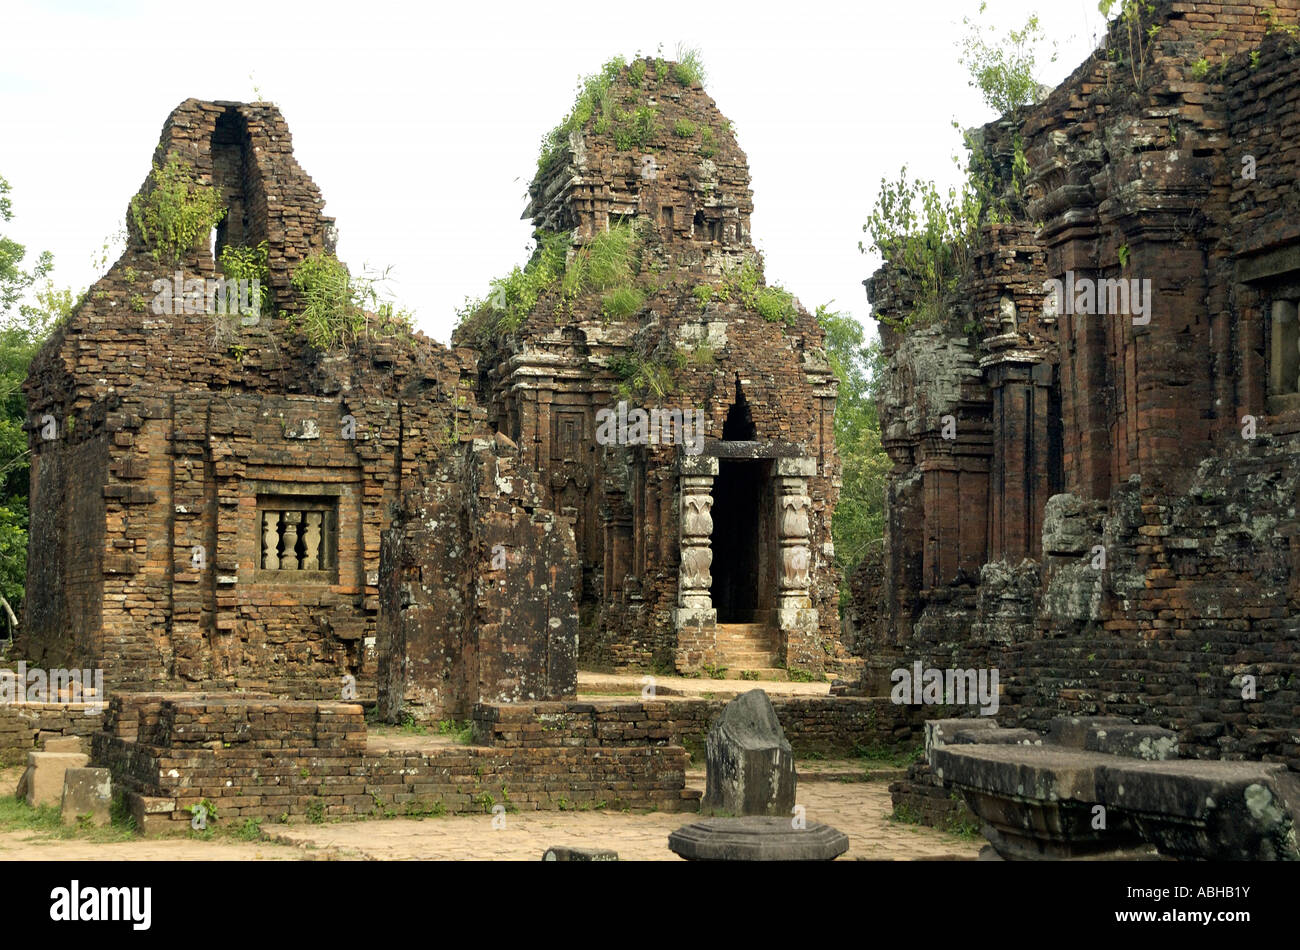 Ruins at My Son ancient capital of the Champa Kingdom near Hoi An